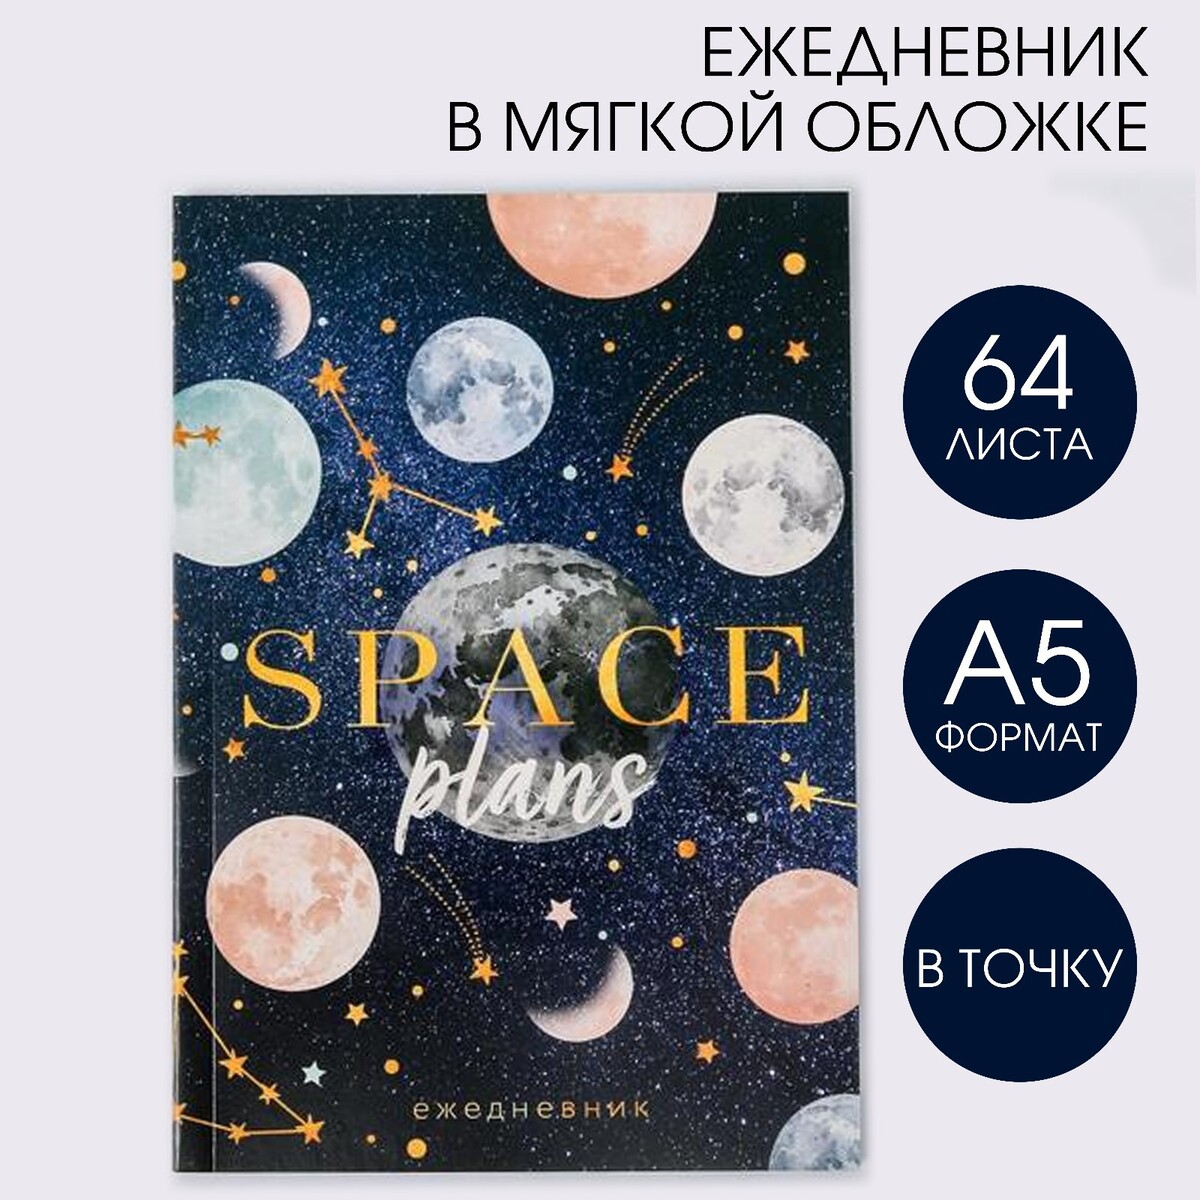     space plans, 5, 64 